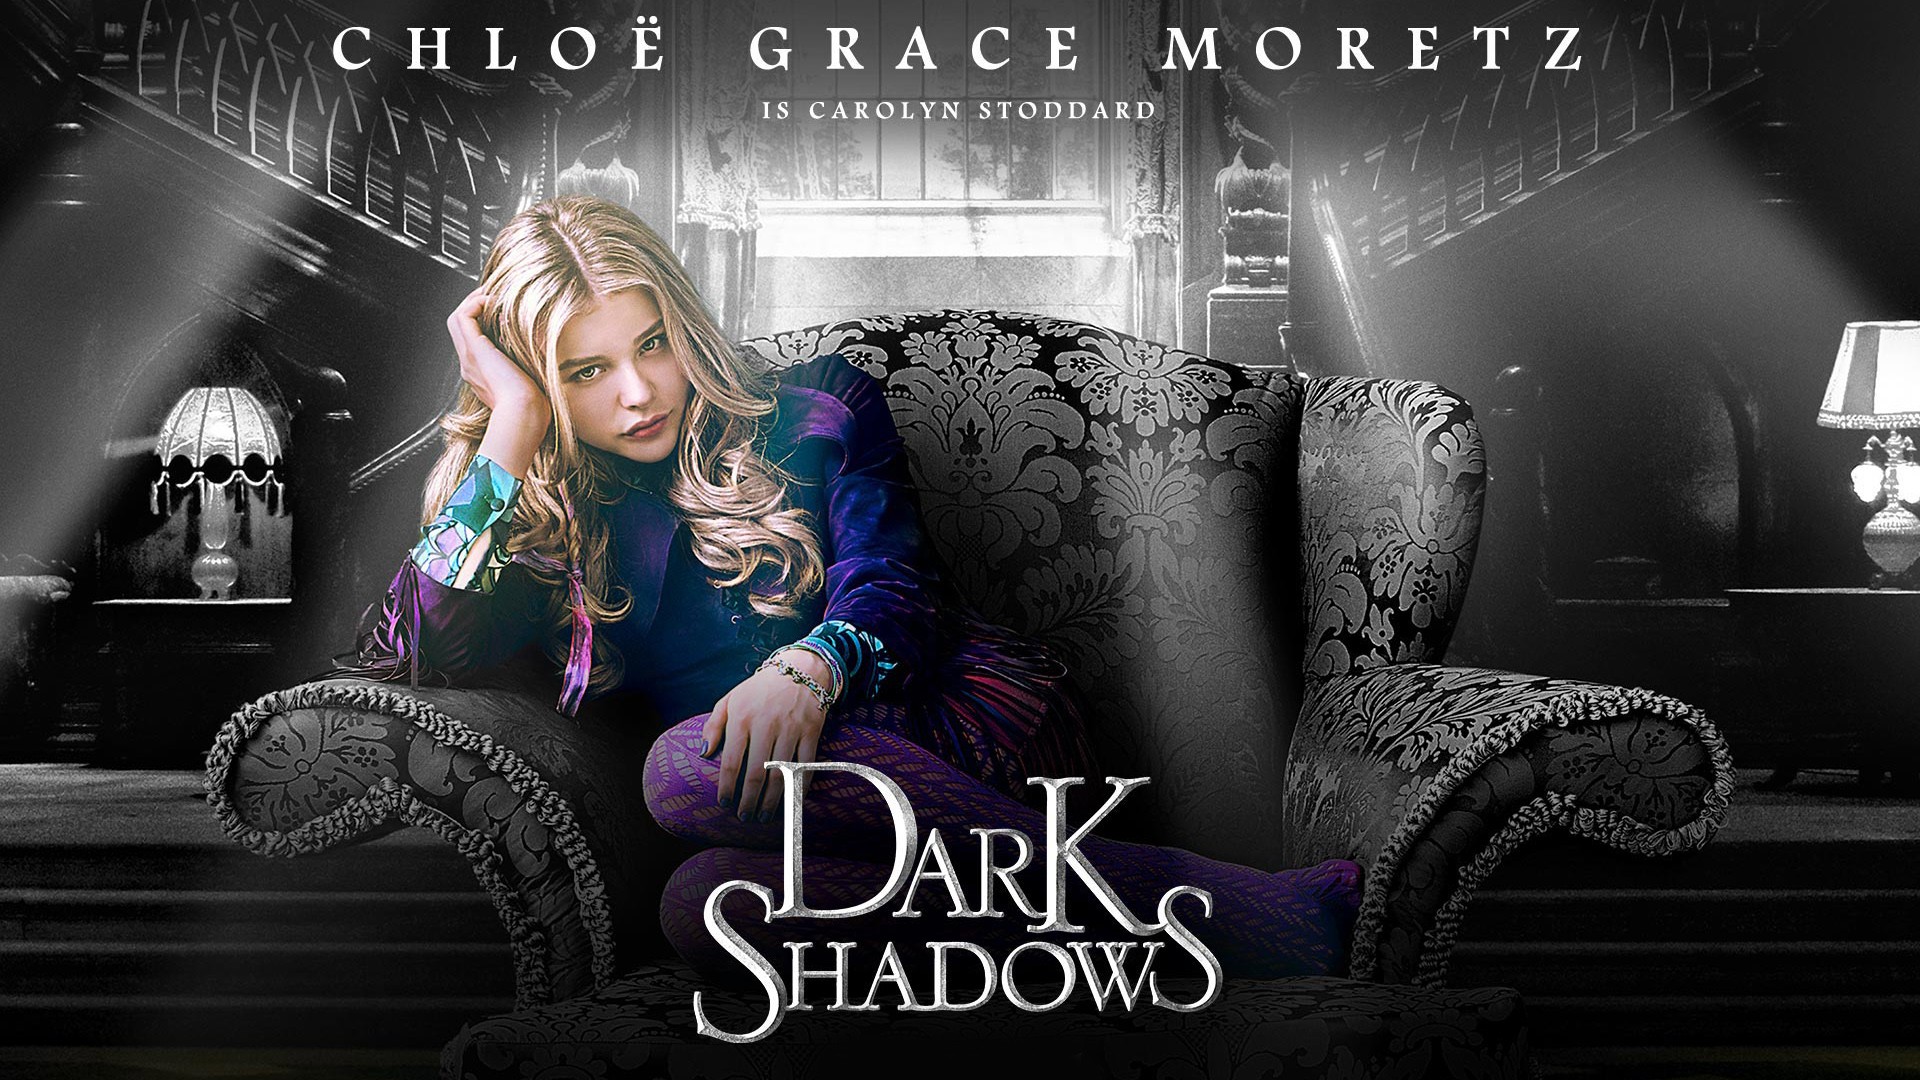 Chloe Grace Moretz Blonde Actress Dark Shadows 1920x1080